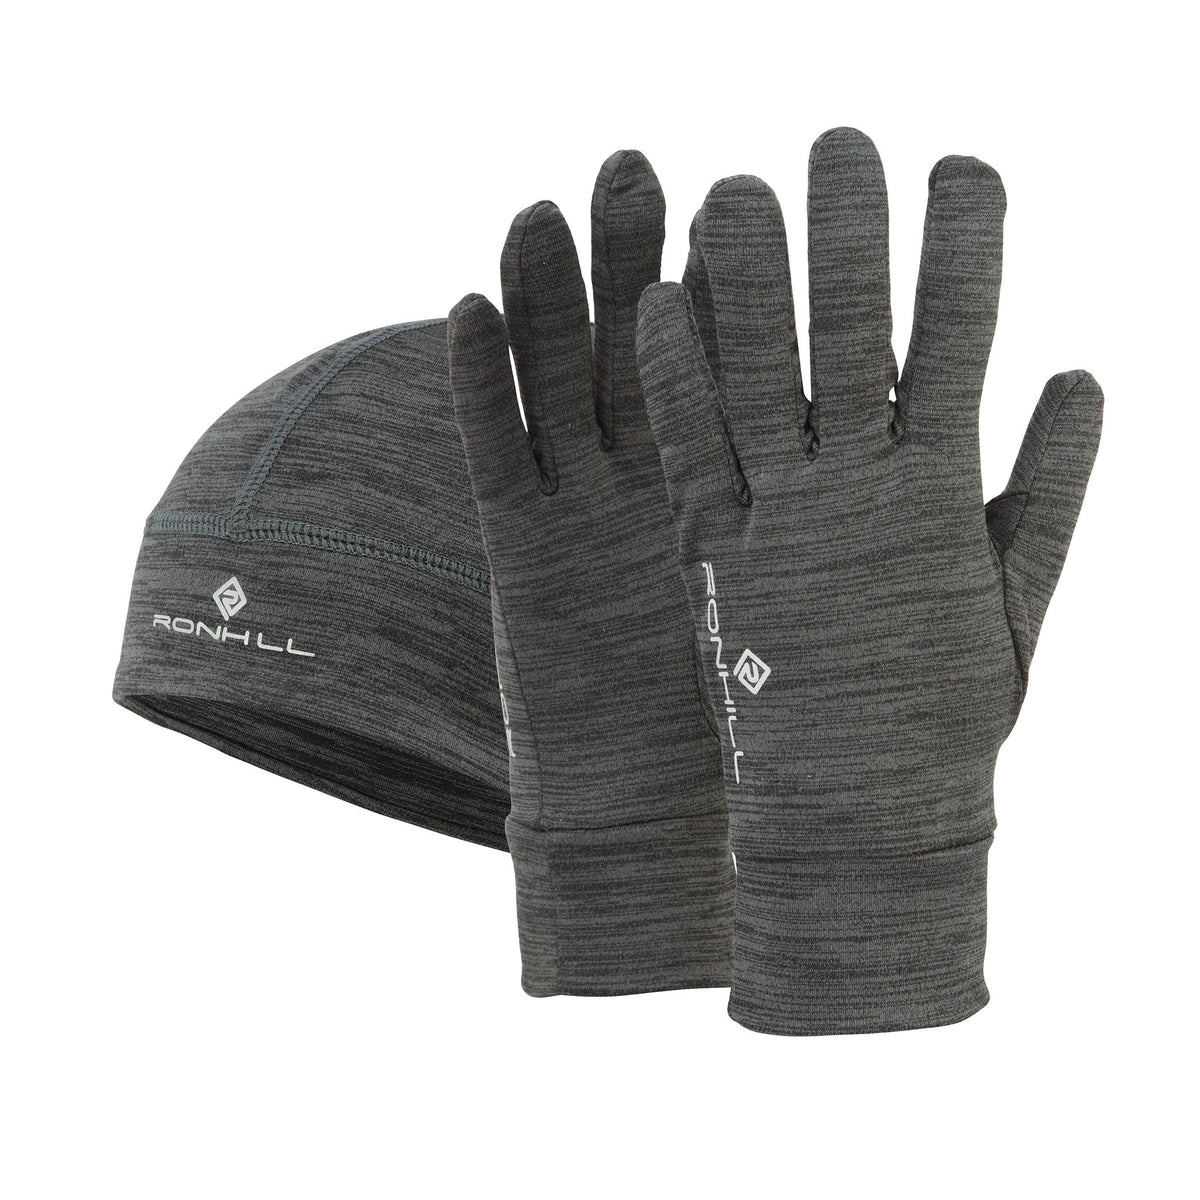 Ronhill Beanie/Glove Set: Charcoal Marl